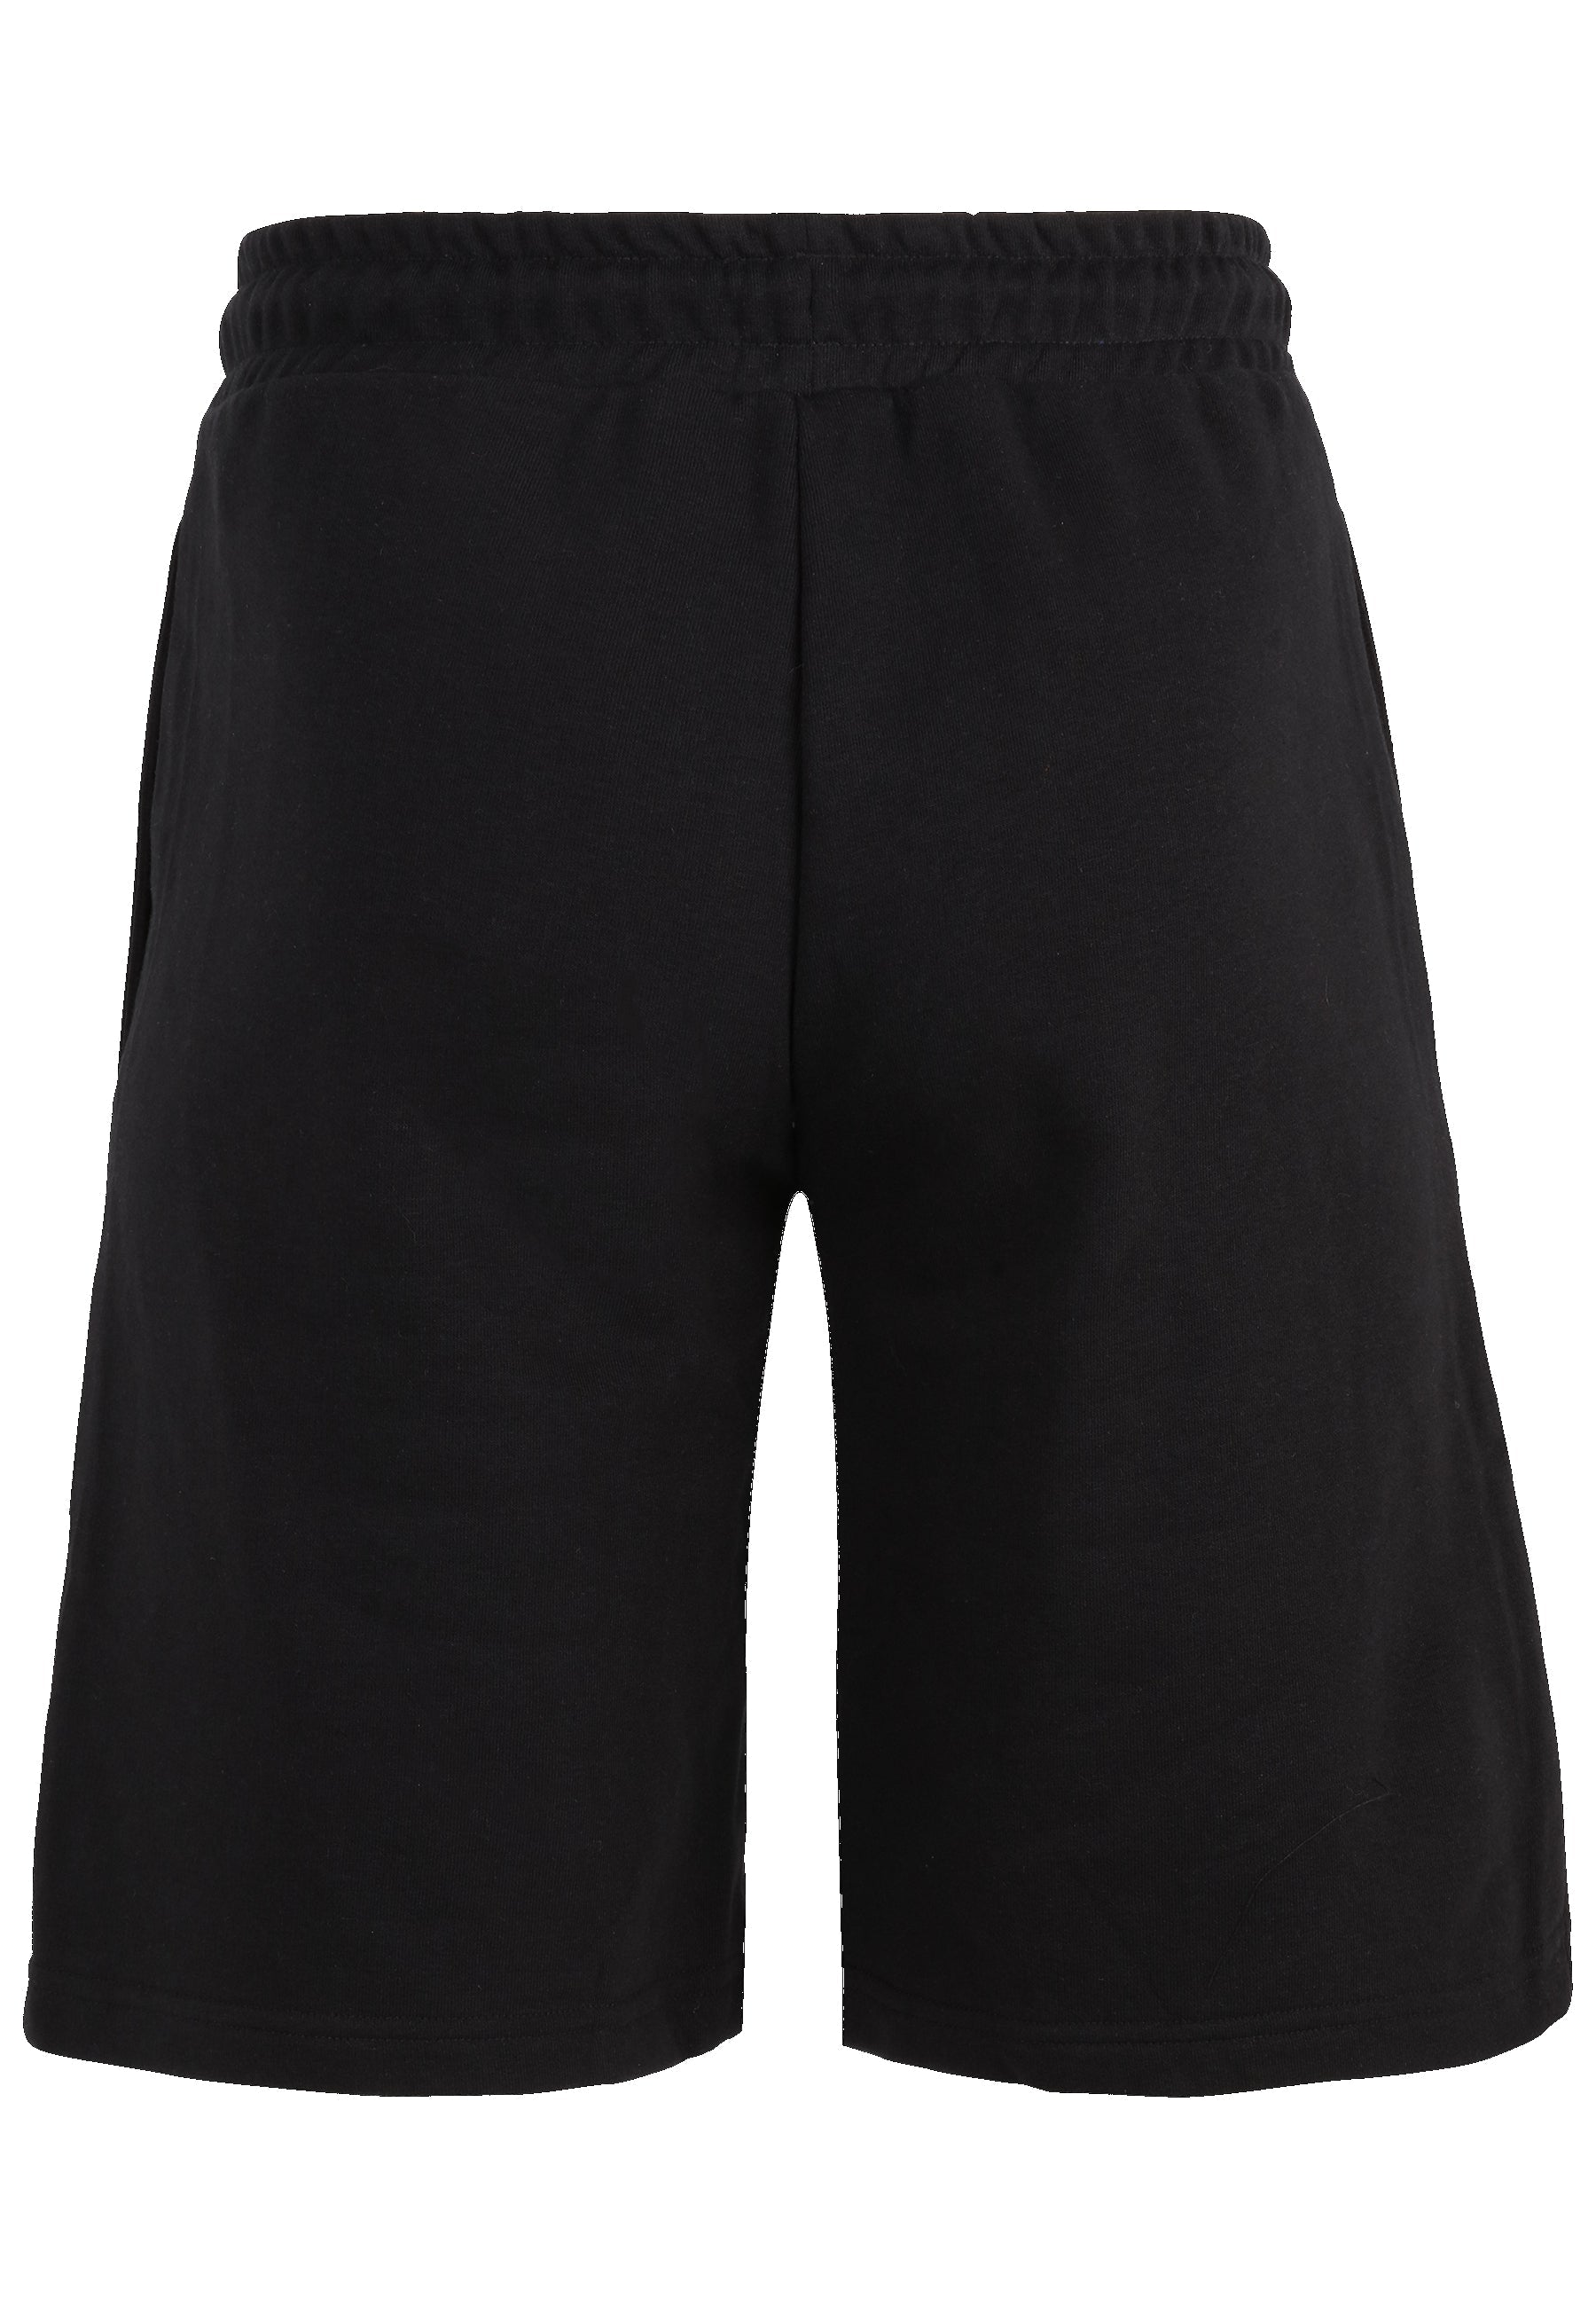 Blehen Sweat Shorts in Black Shorts Fila   